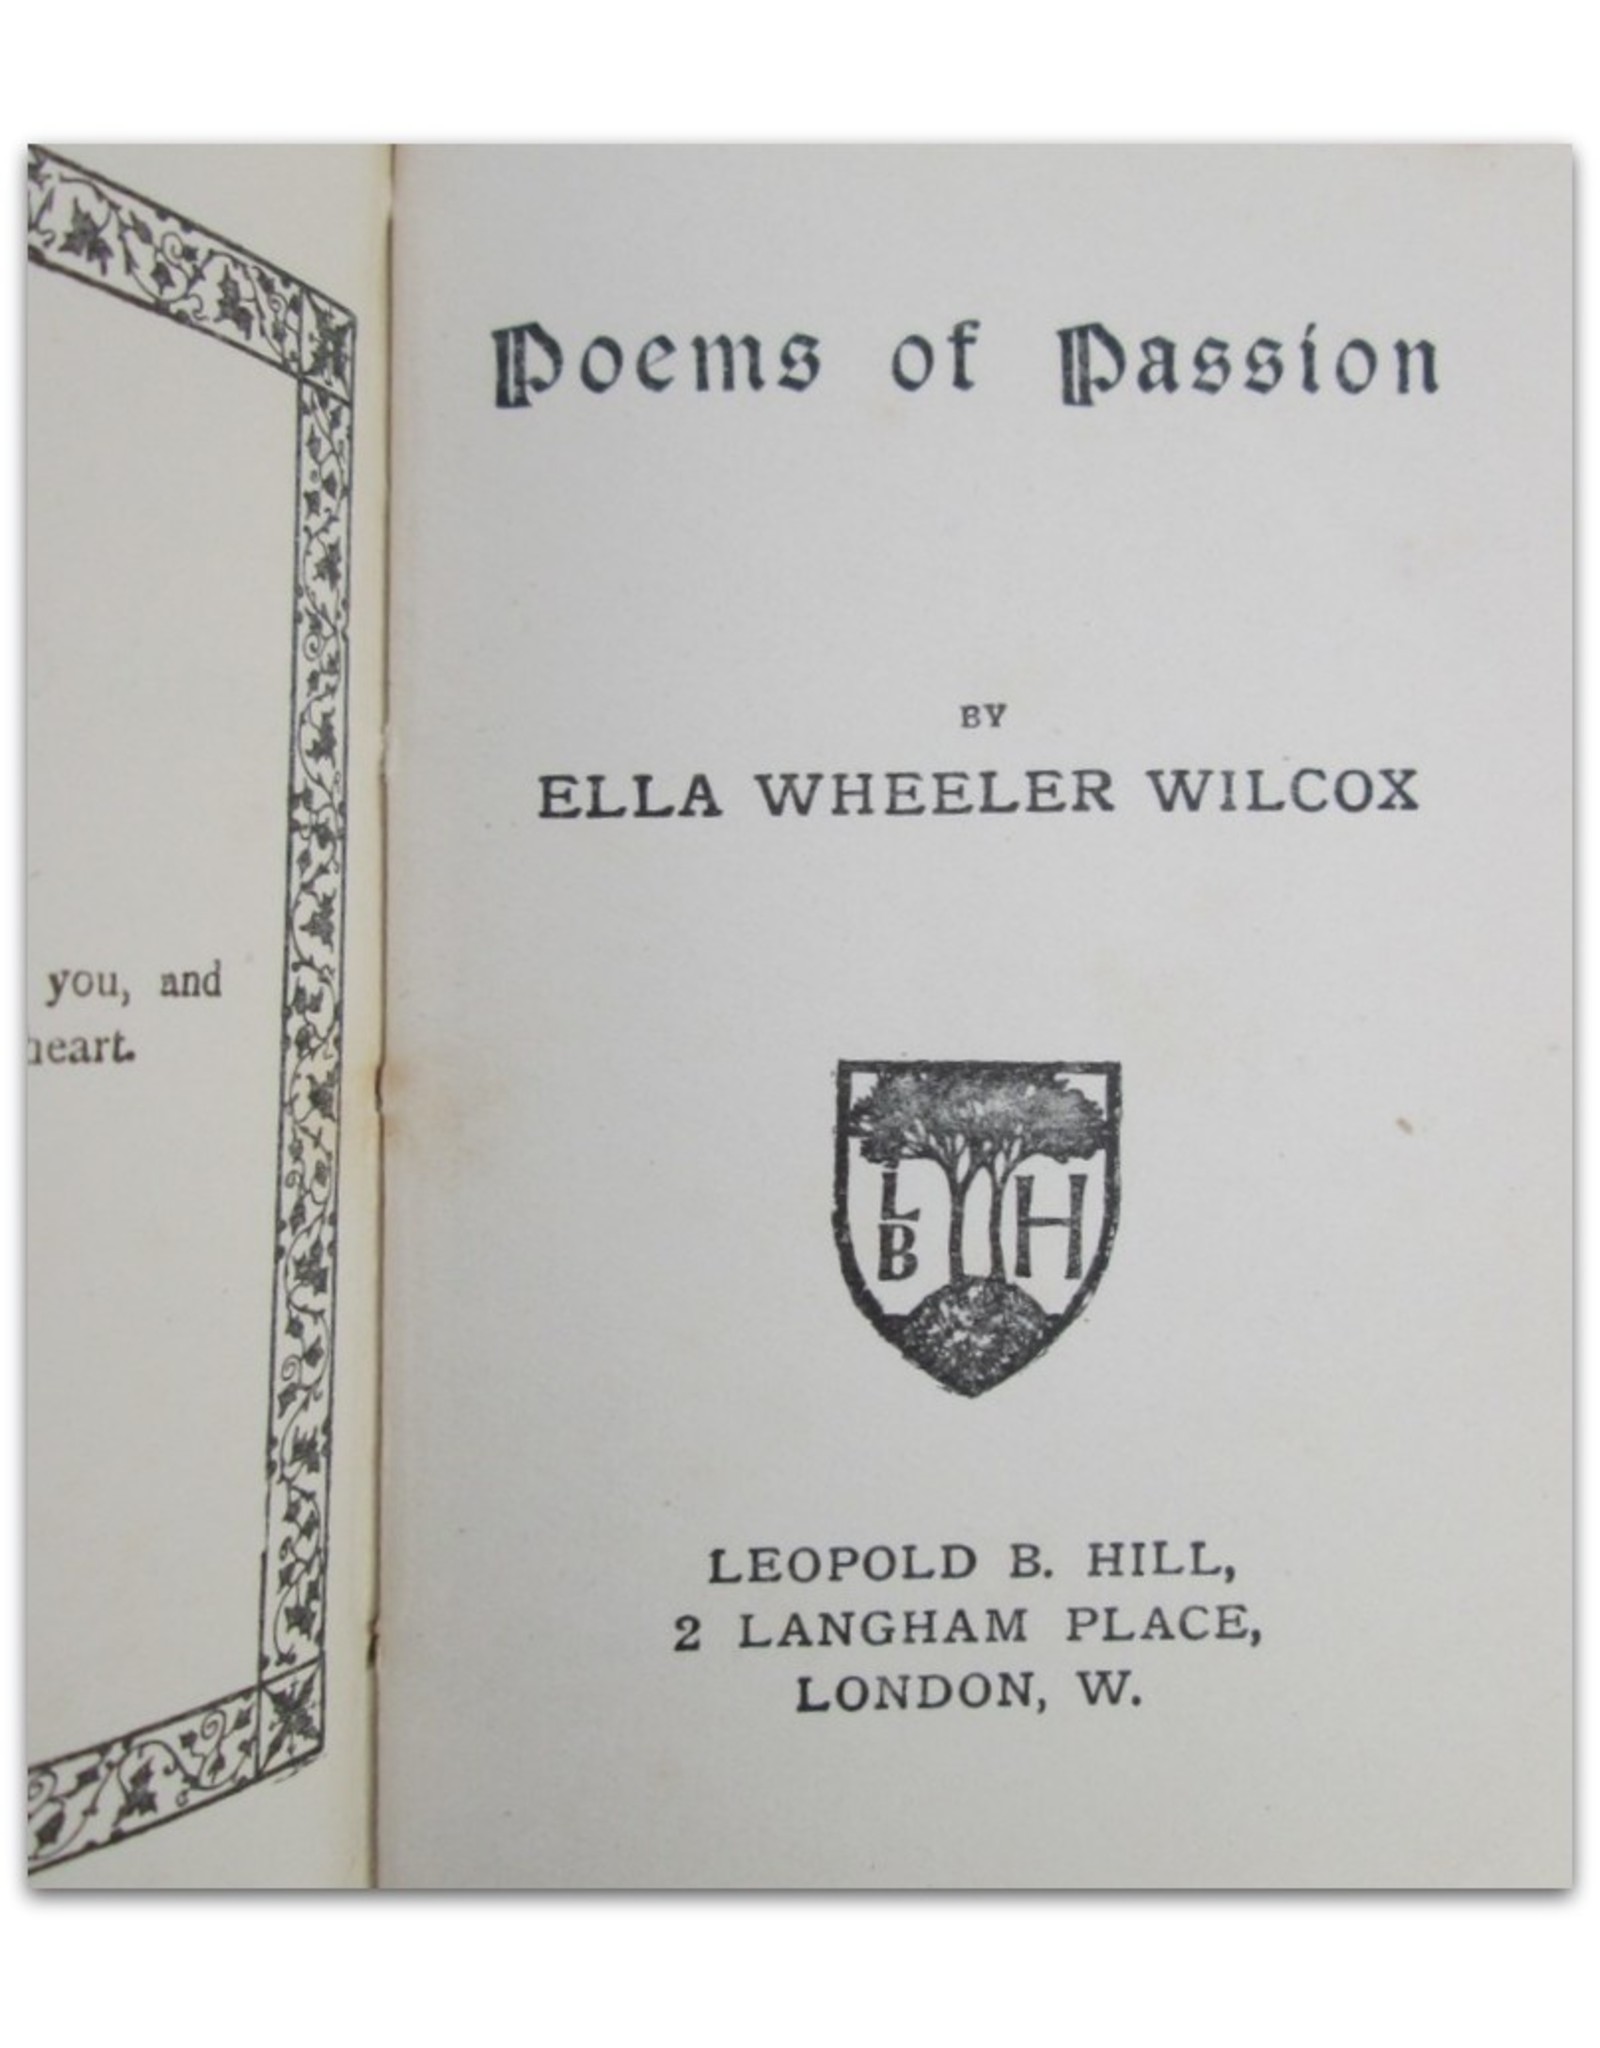 Ella Wheeler Wilcox - Poems of Passion